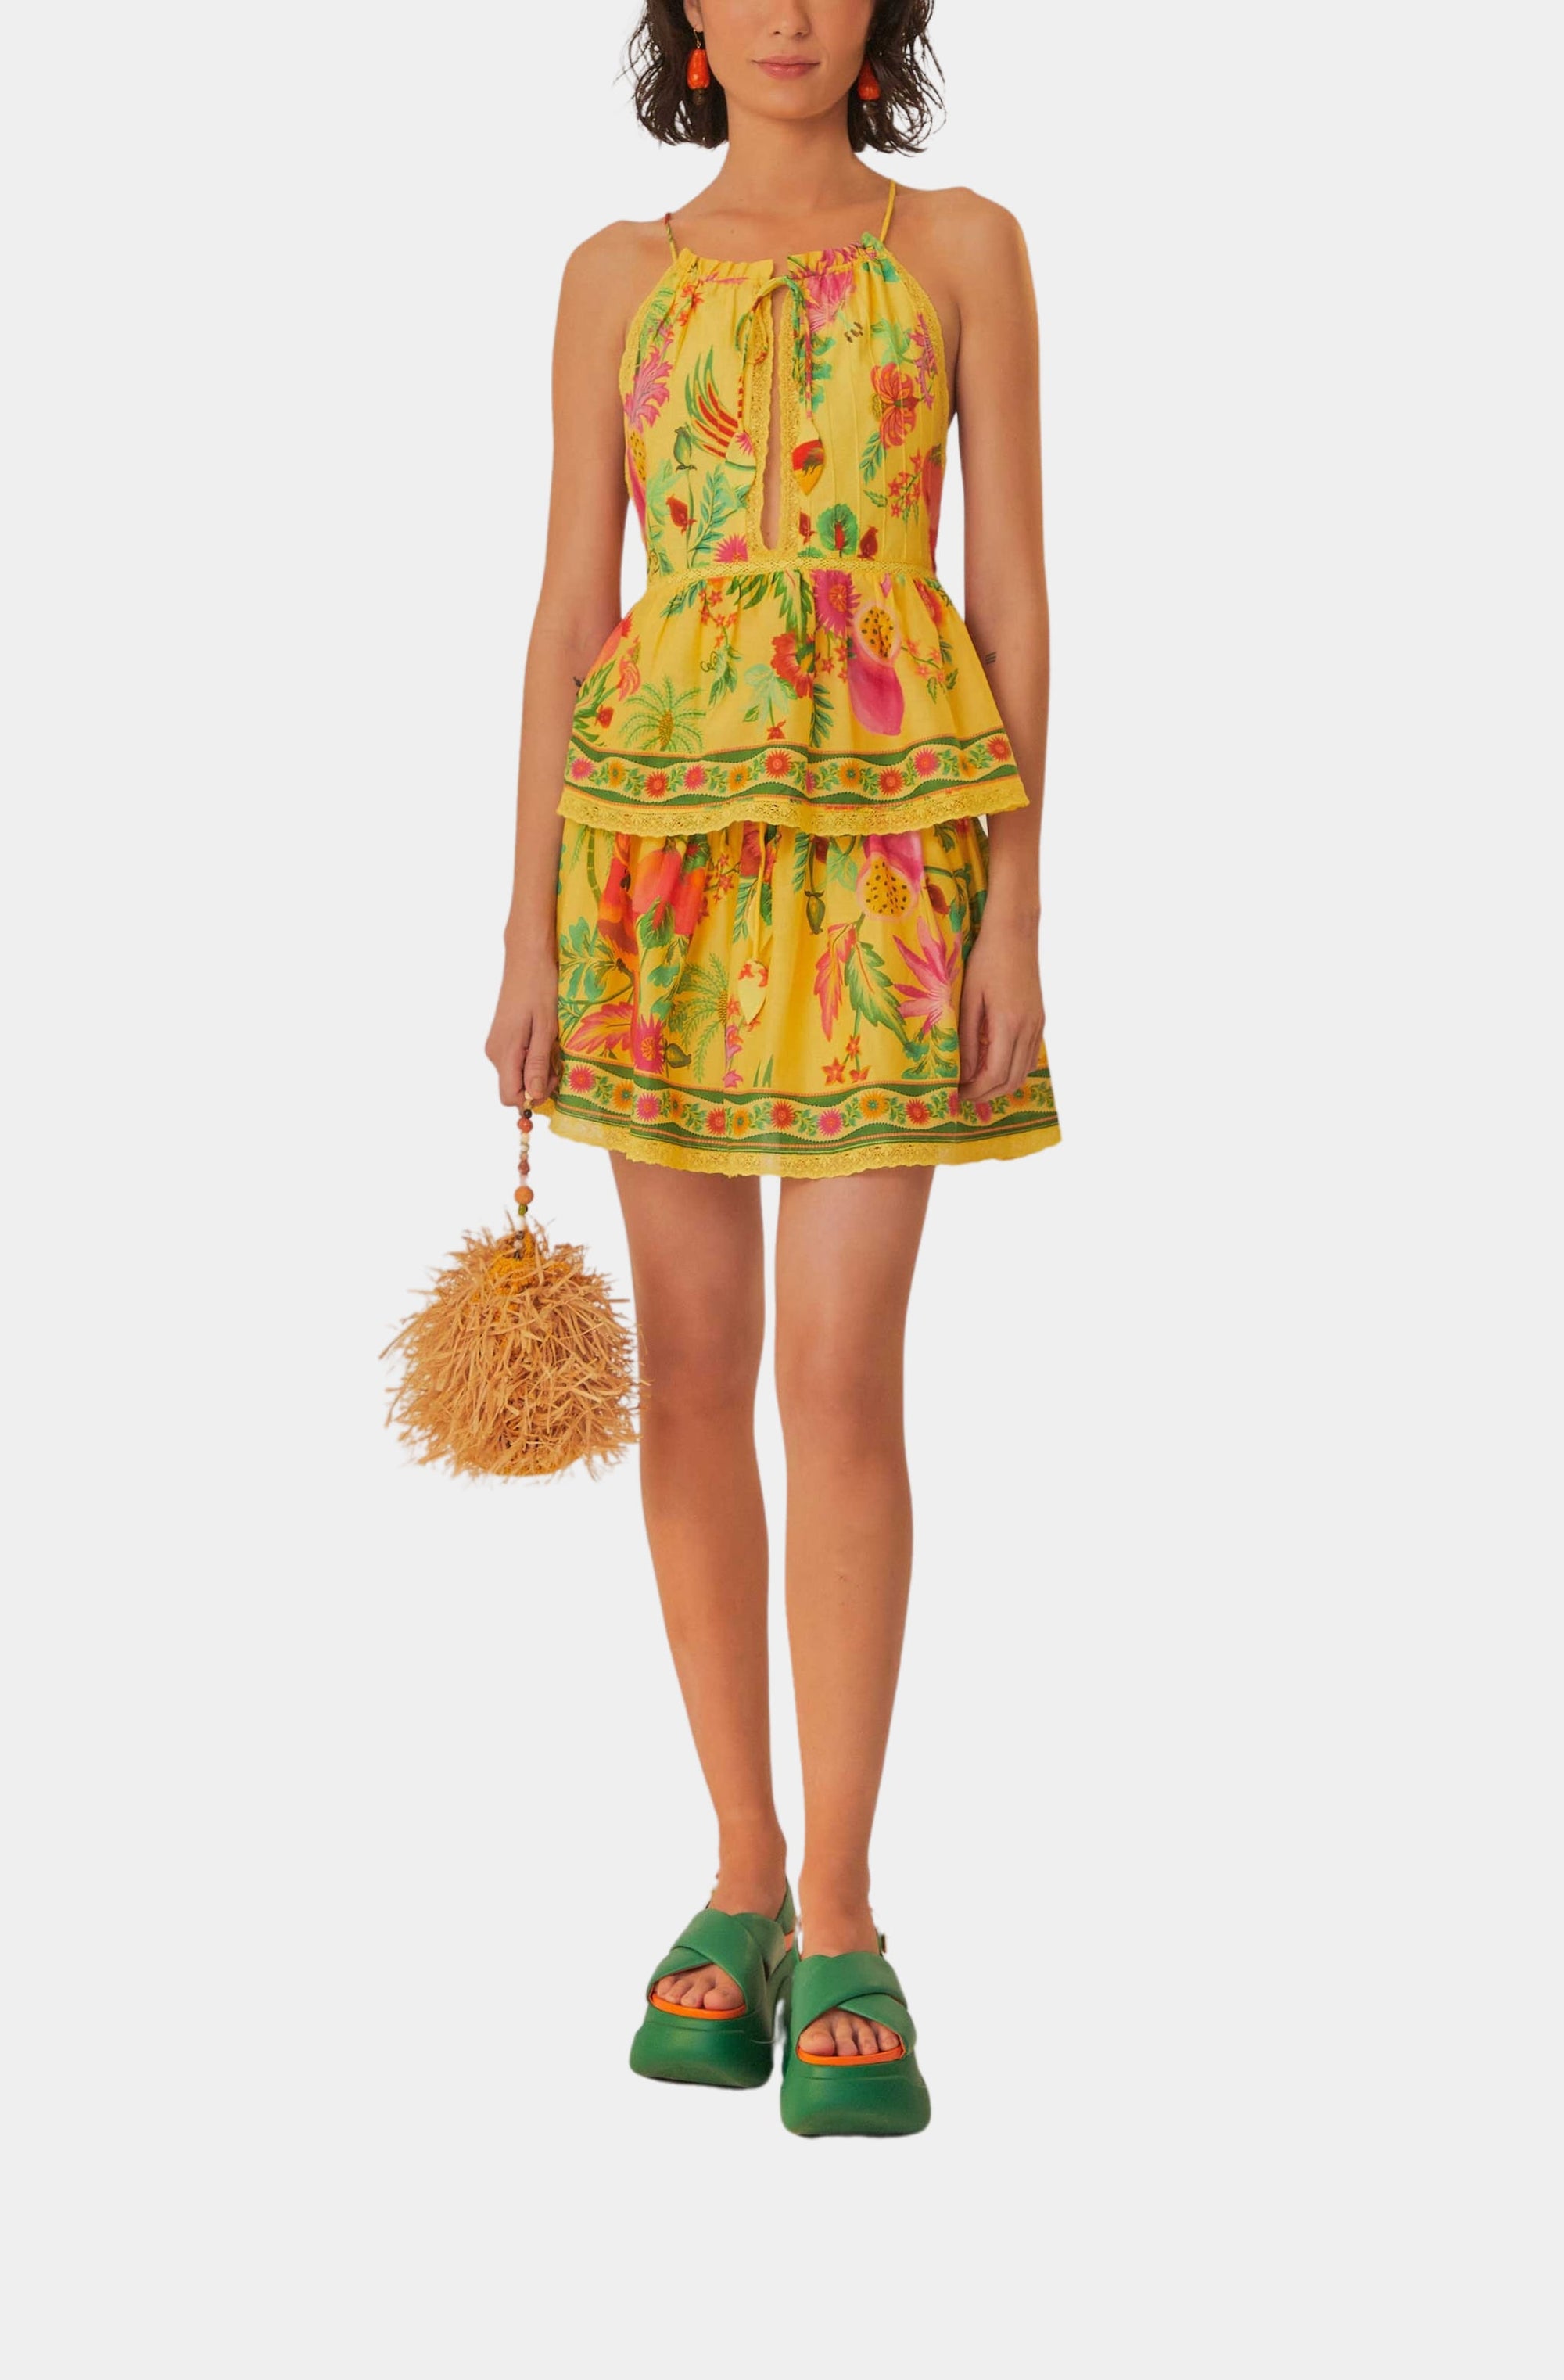 Delicate Fruit Garden Yellow Mini Skirt